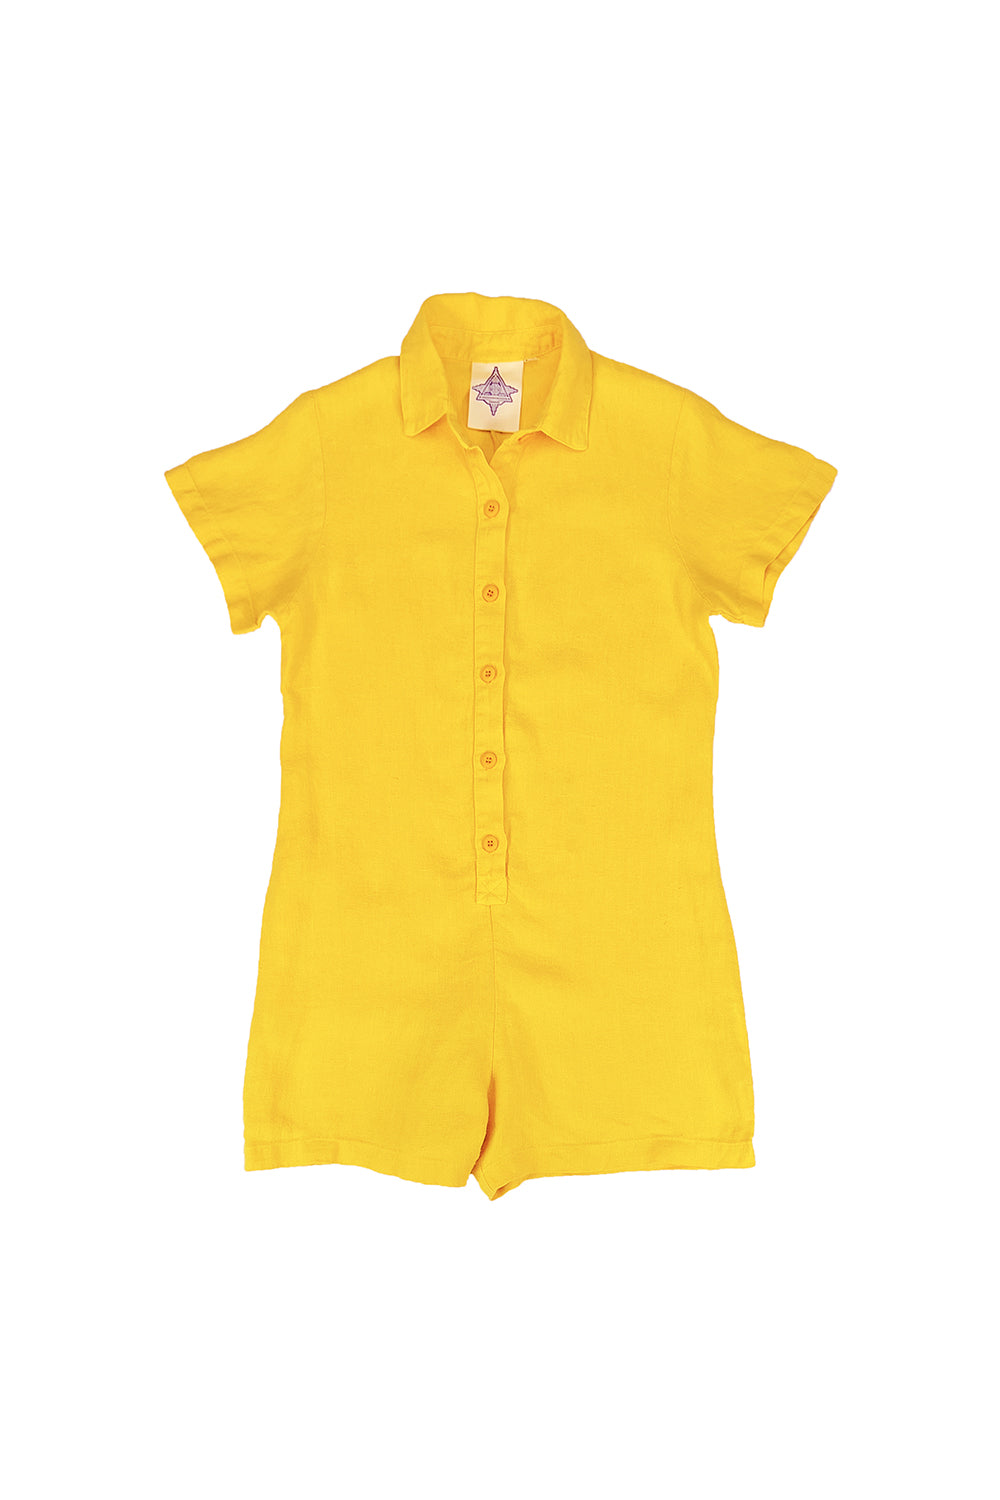 Stillwater Polo Romper | Jungmaven Hemp Clothing & Accessories / Color: Sunshine Yellow